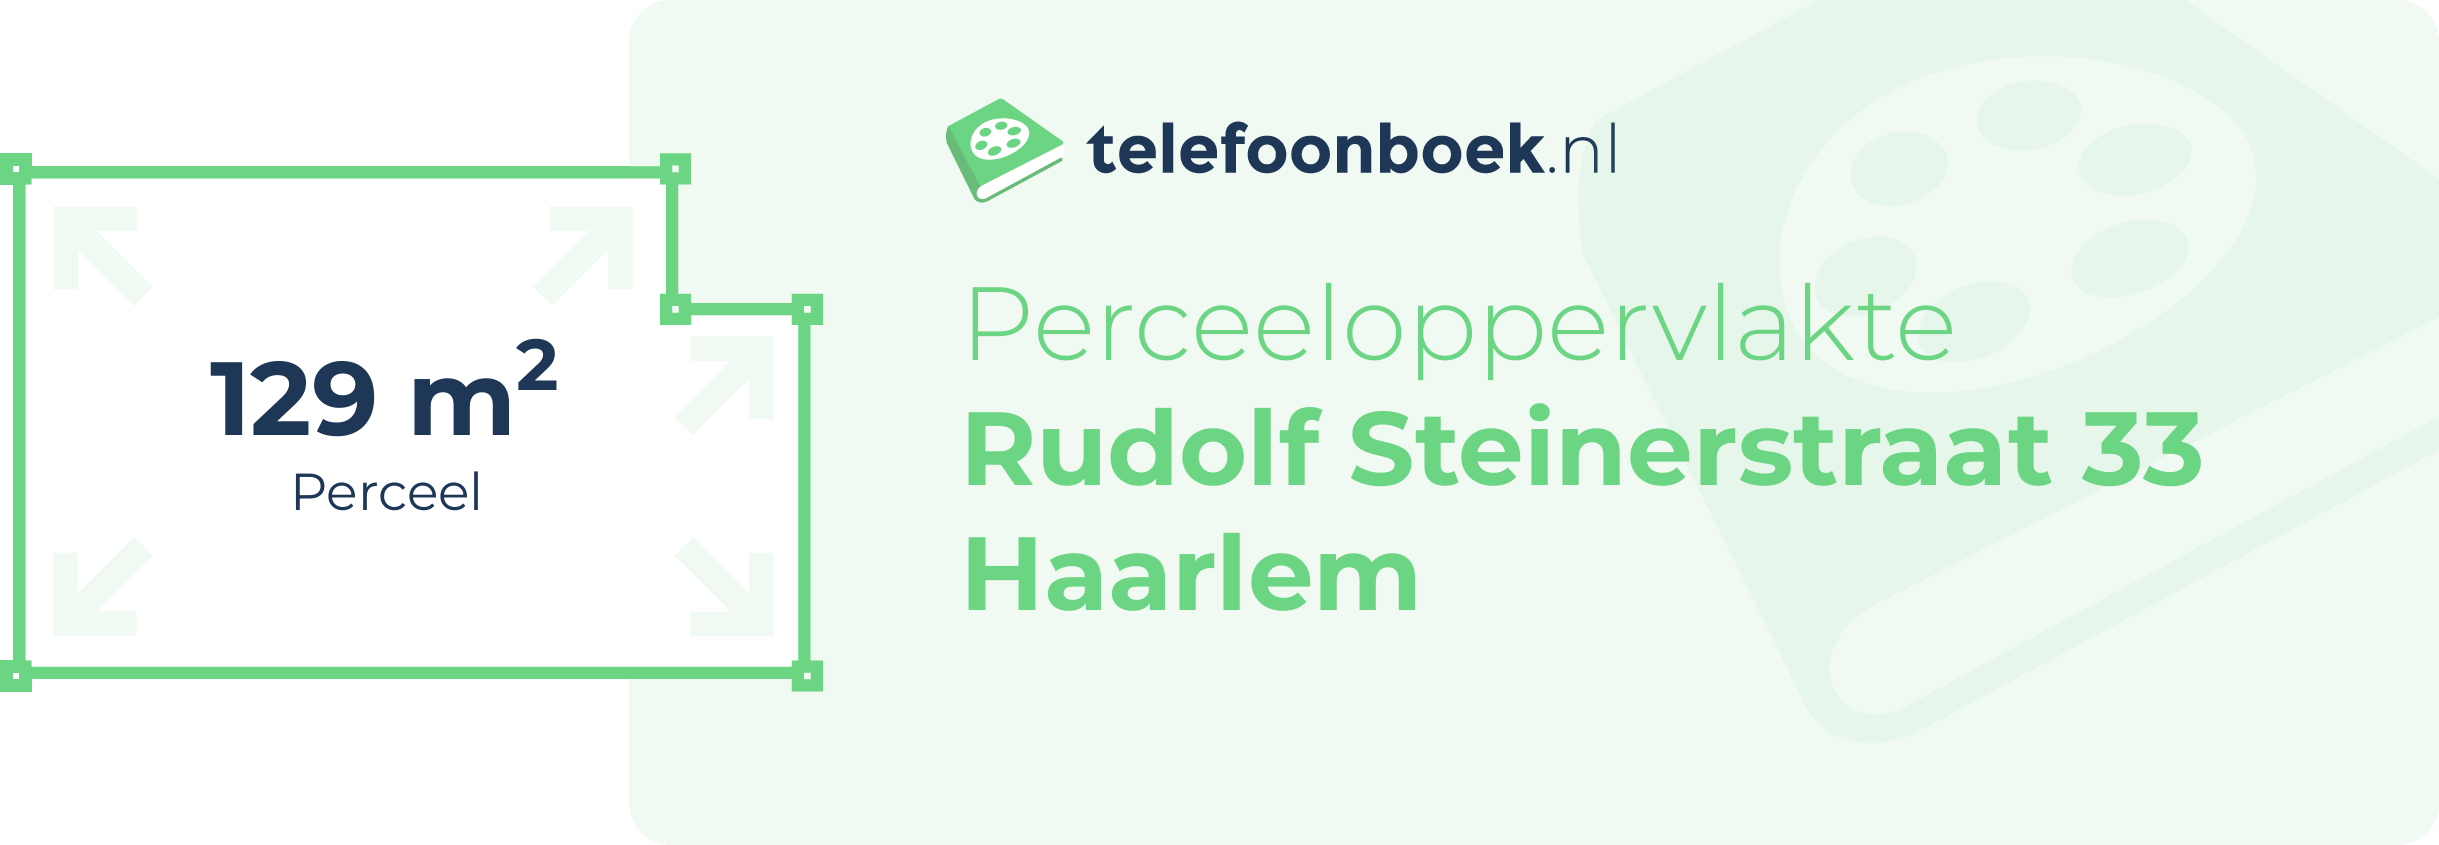 Perceeloppervlakte Rudolf Steinerstraat 33 Haarlem